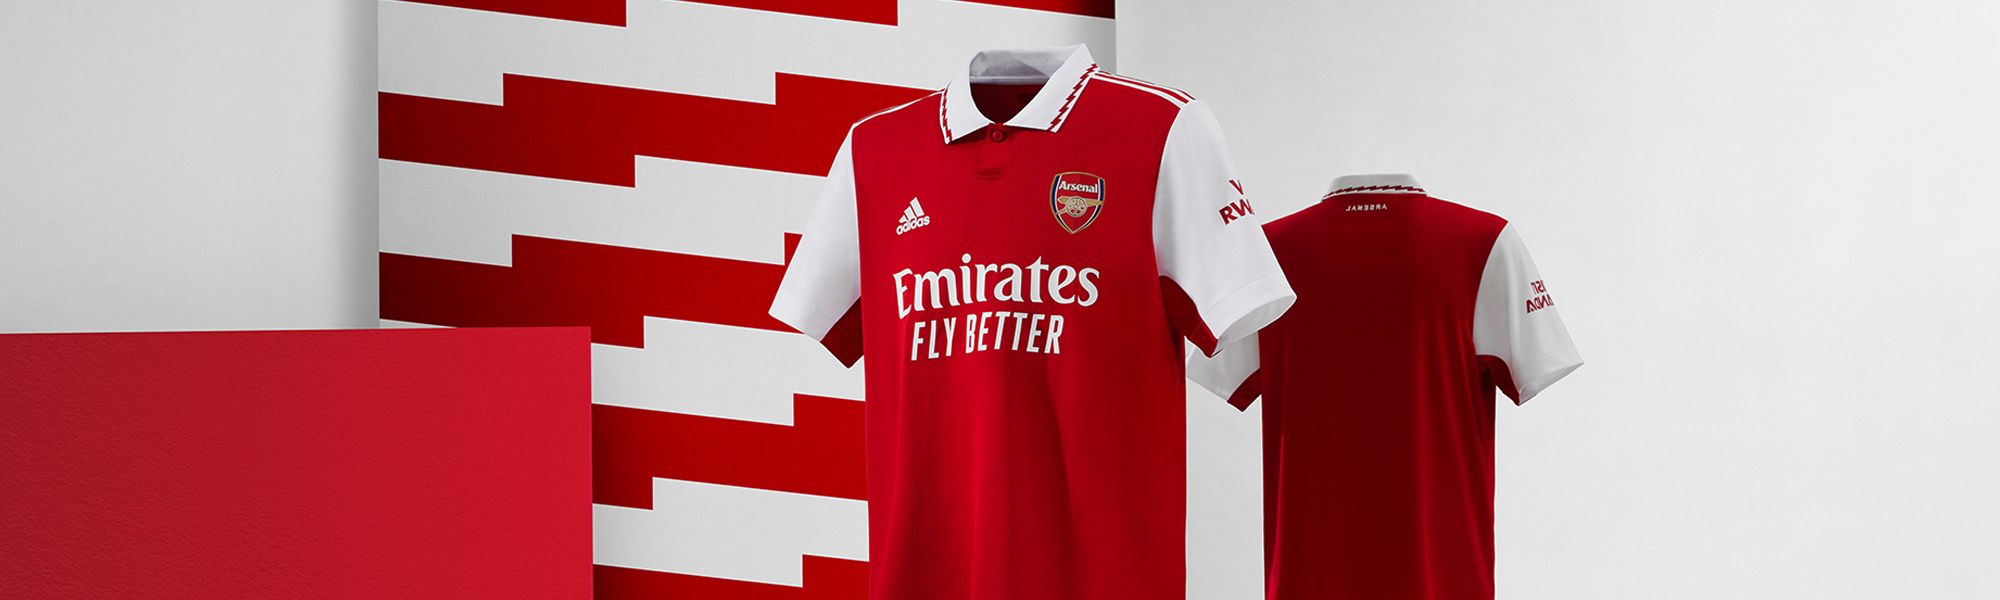 Kaal hypothese Rijd weg Arsenal Jerseys - Arsenal FC Apparel and Gear - SoccerPro.com